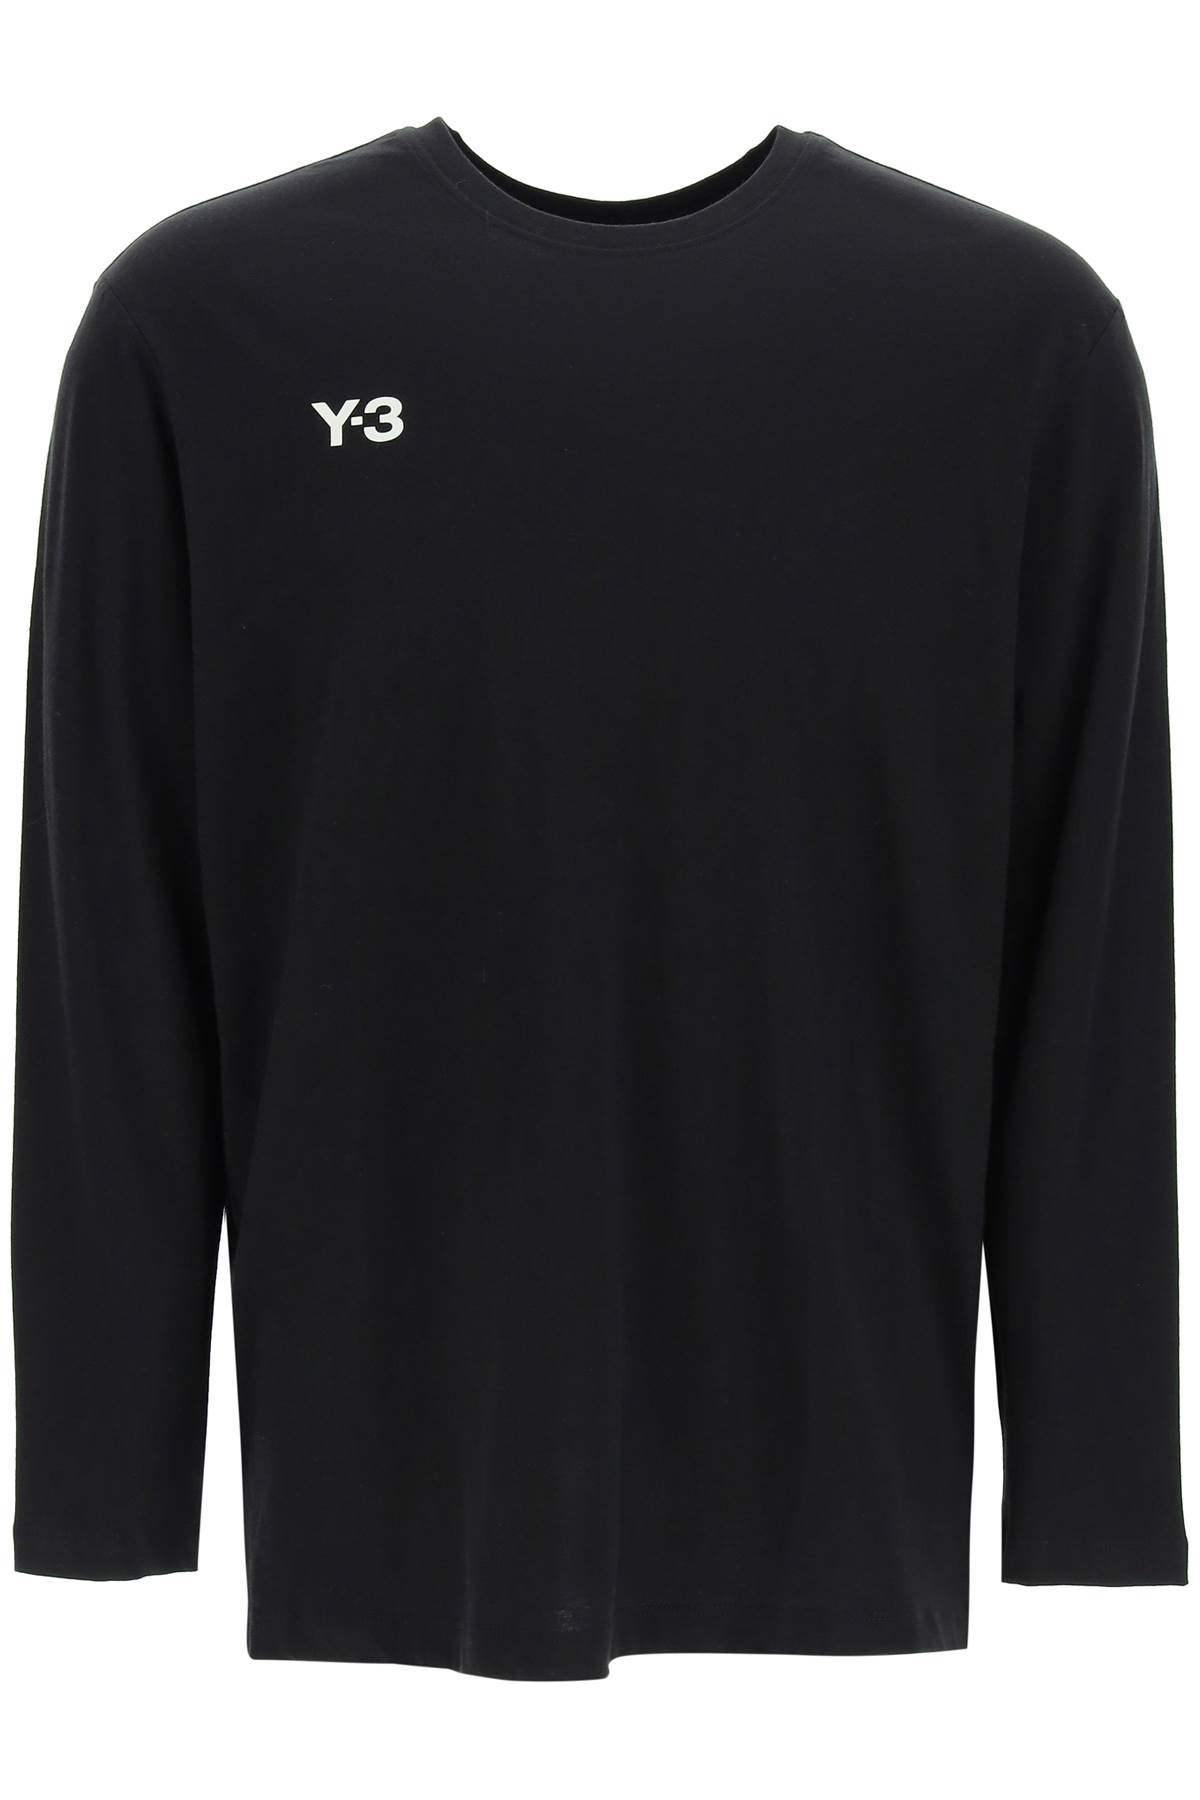 Y-3 Yohji Back Print T-shirt